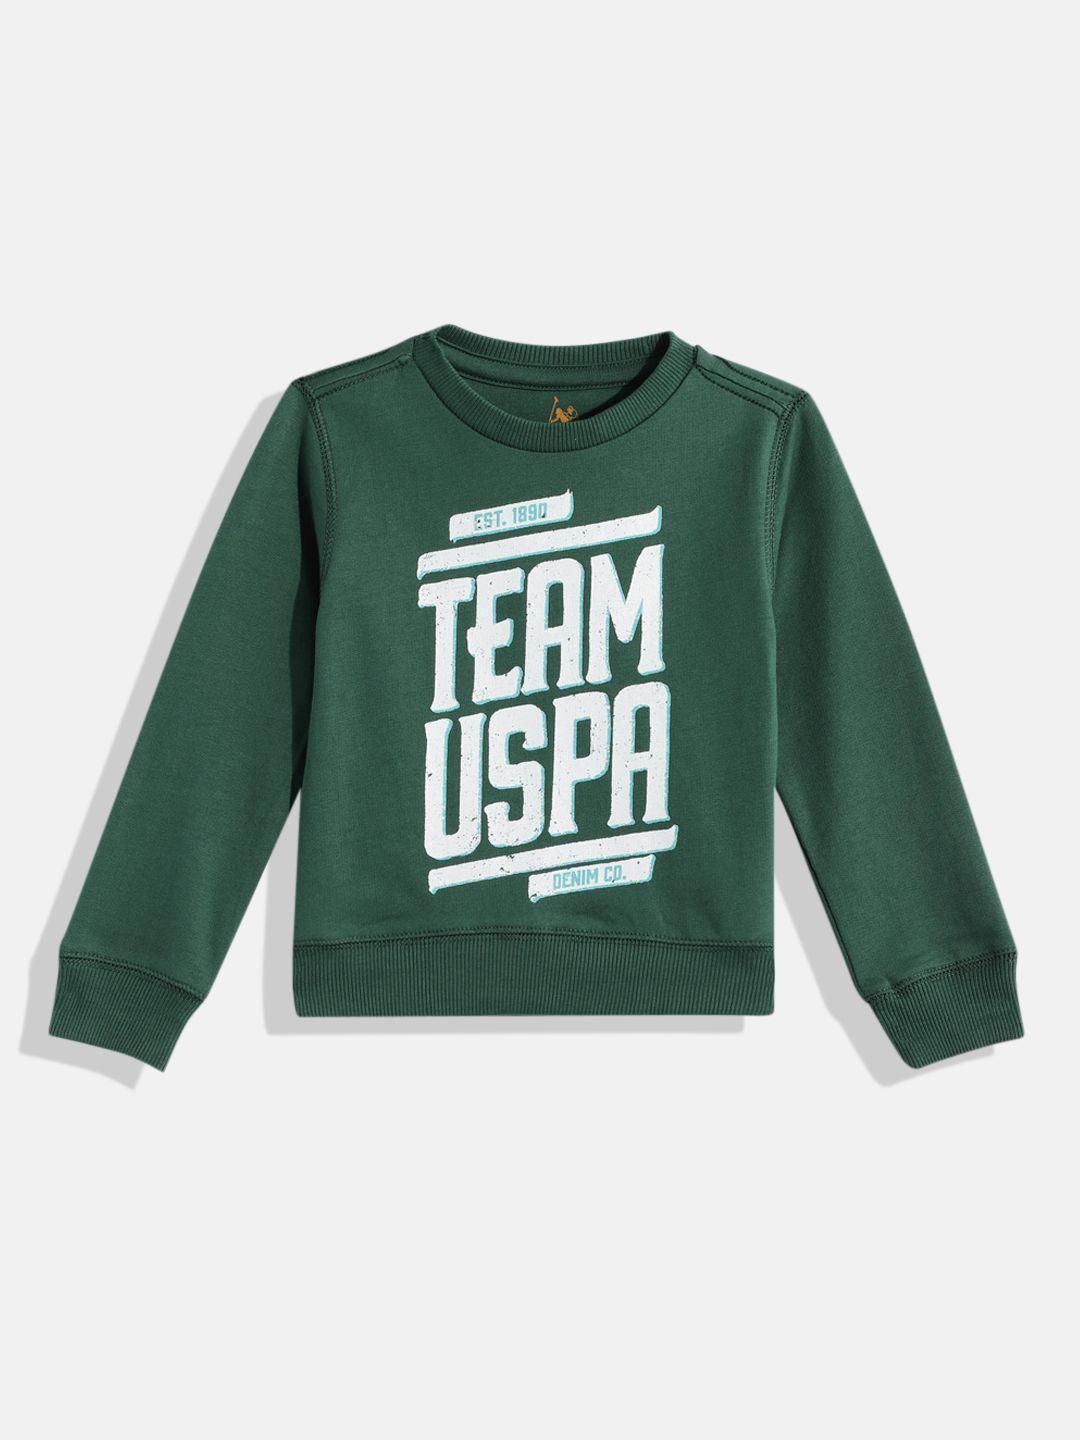 u.s. polo assn. kids boys green brand logo printed pure cotton cropped sweatshirt